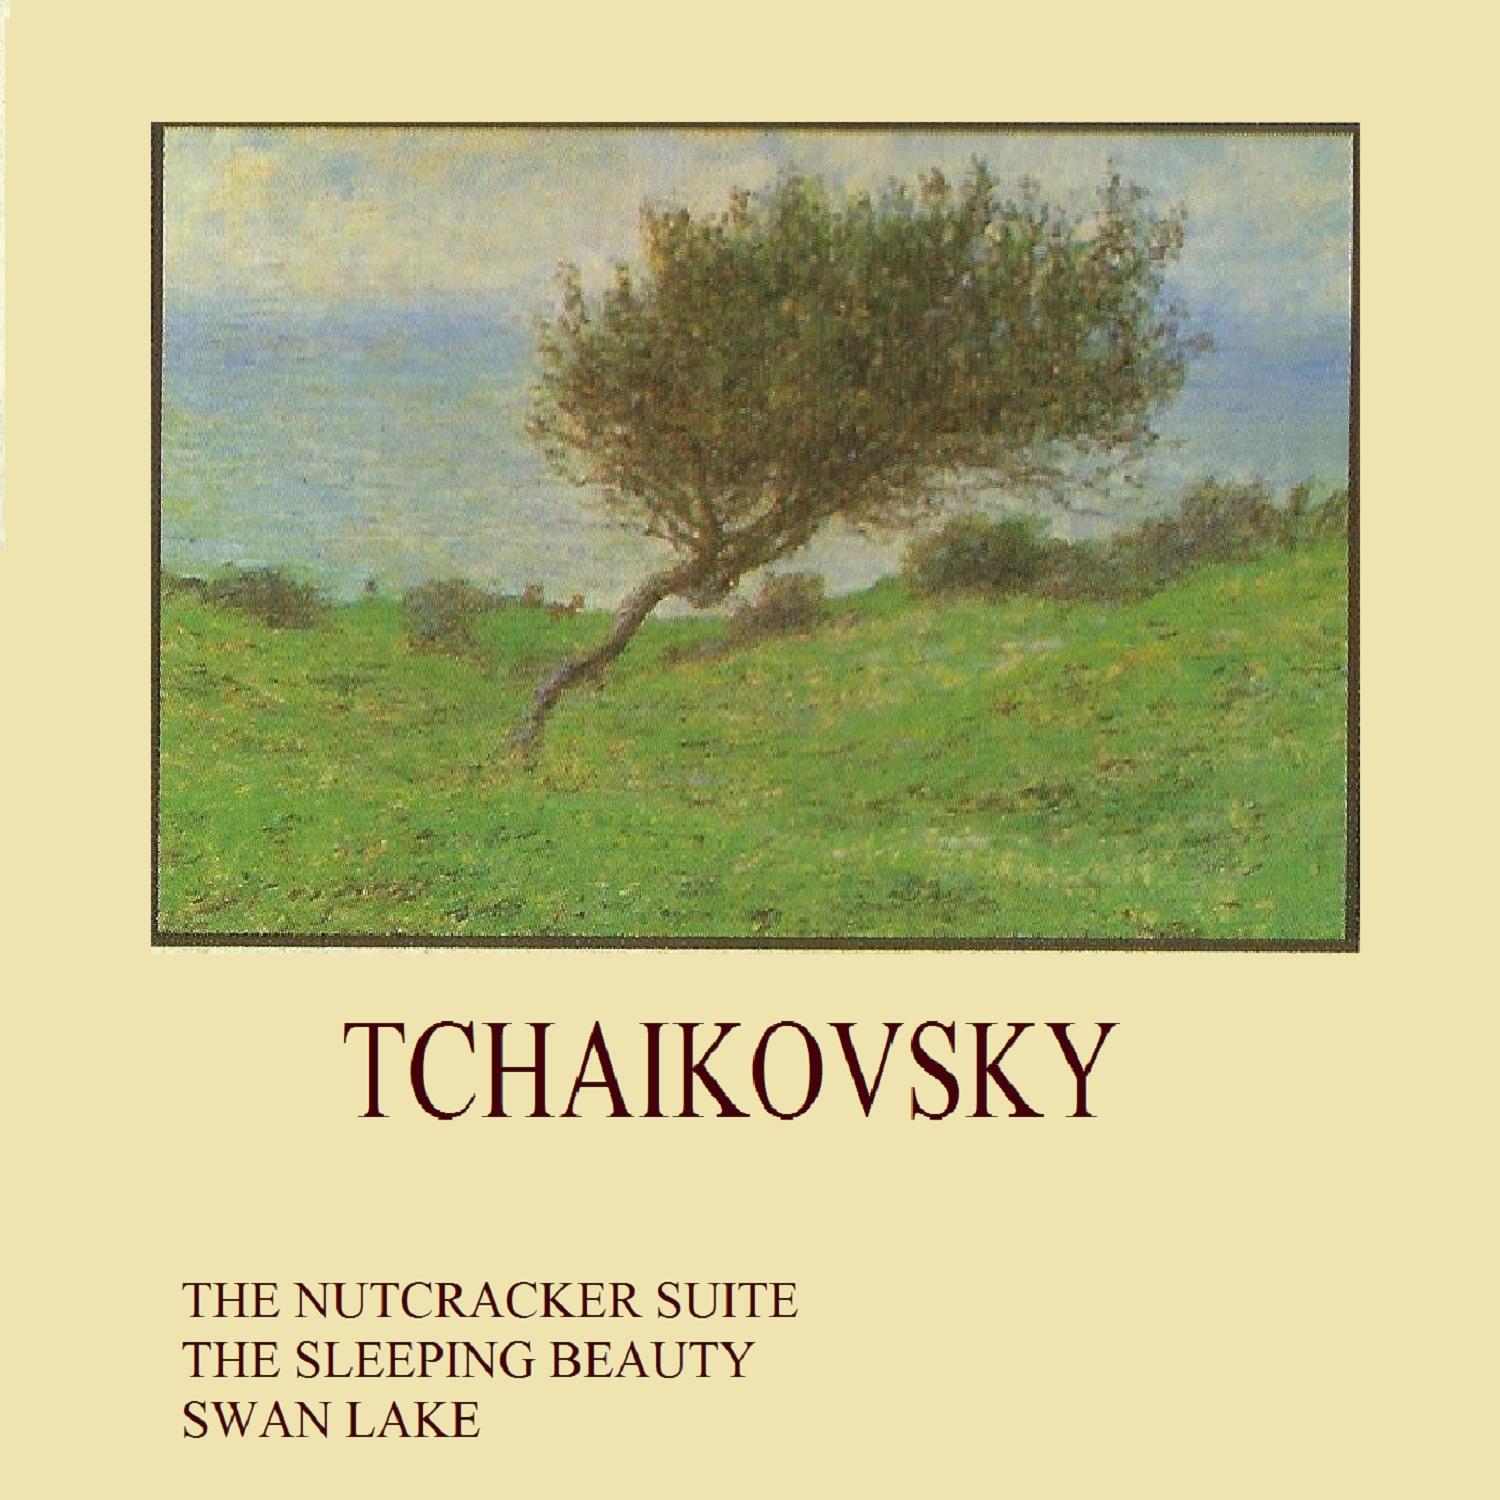 Tchaikovsky, The Nutcracker Suite, The Sleeping Beauty, Swan Lake